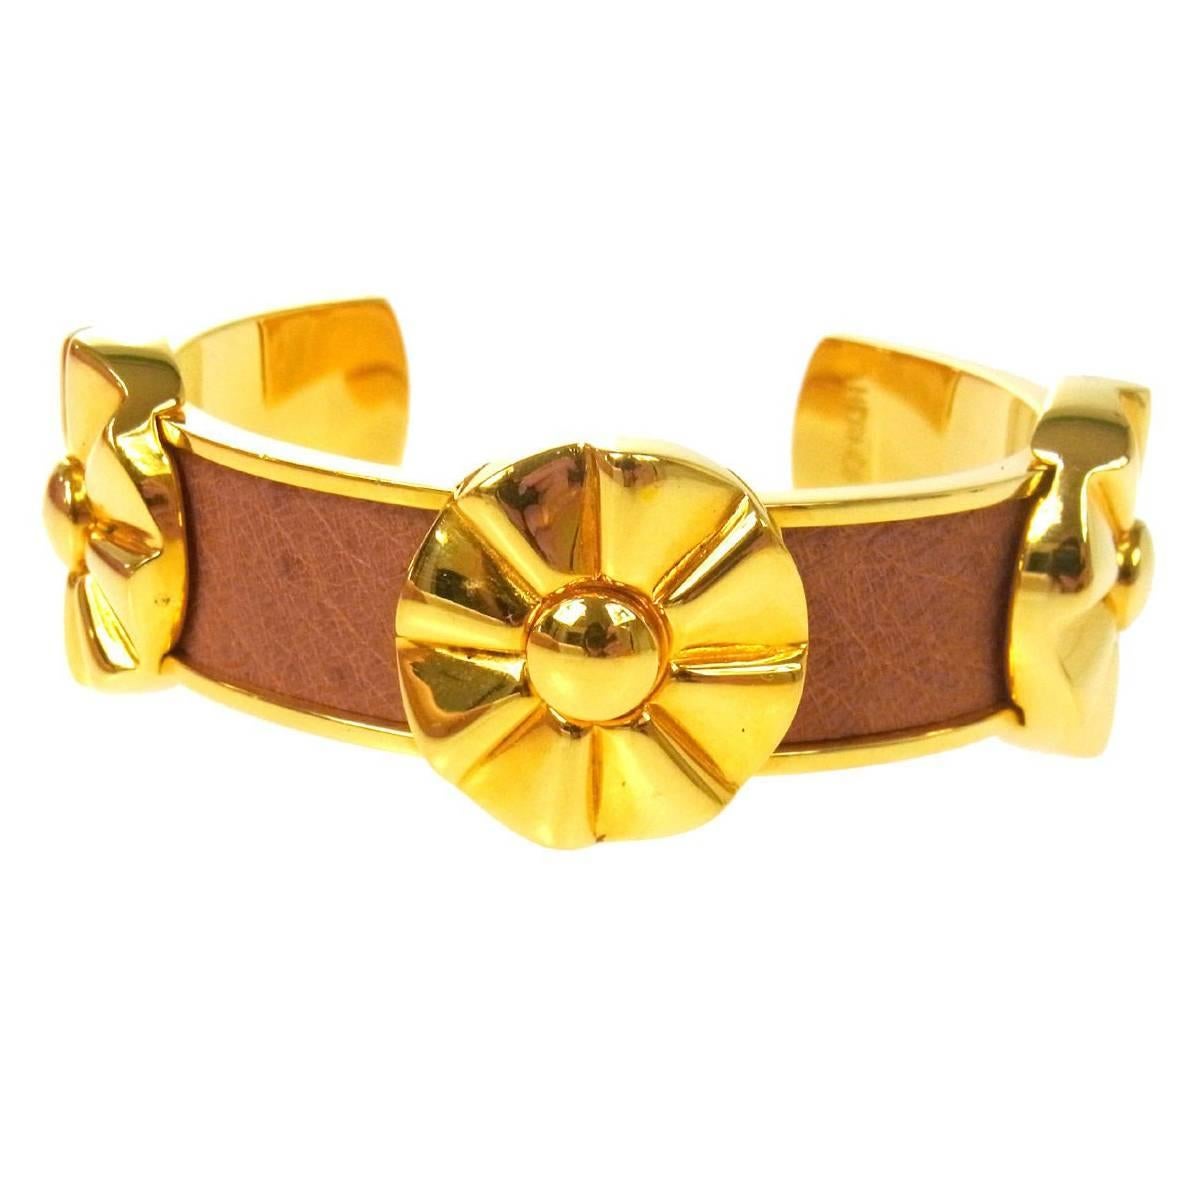 Hermes Cognac Tan Leather Gold Flower Charm Evening Cuff Bracelet in Box